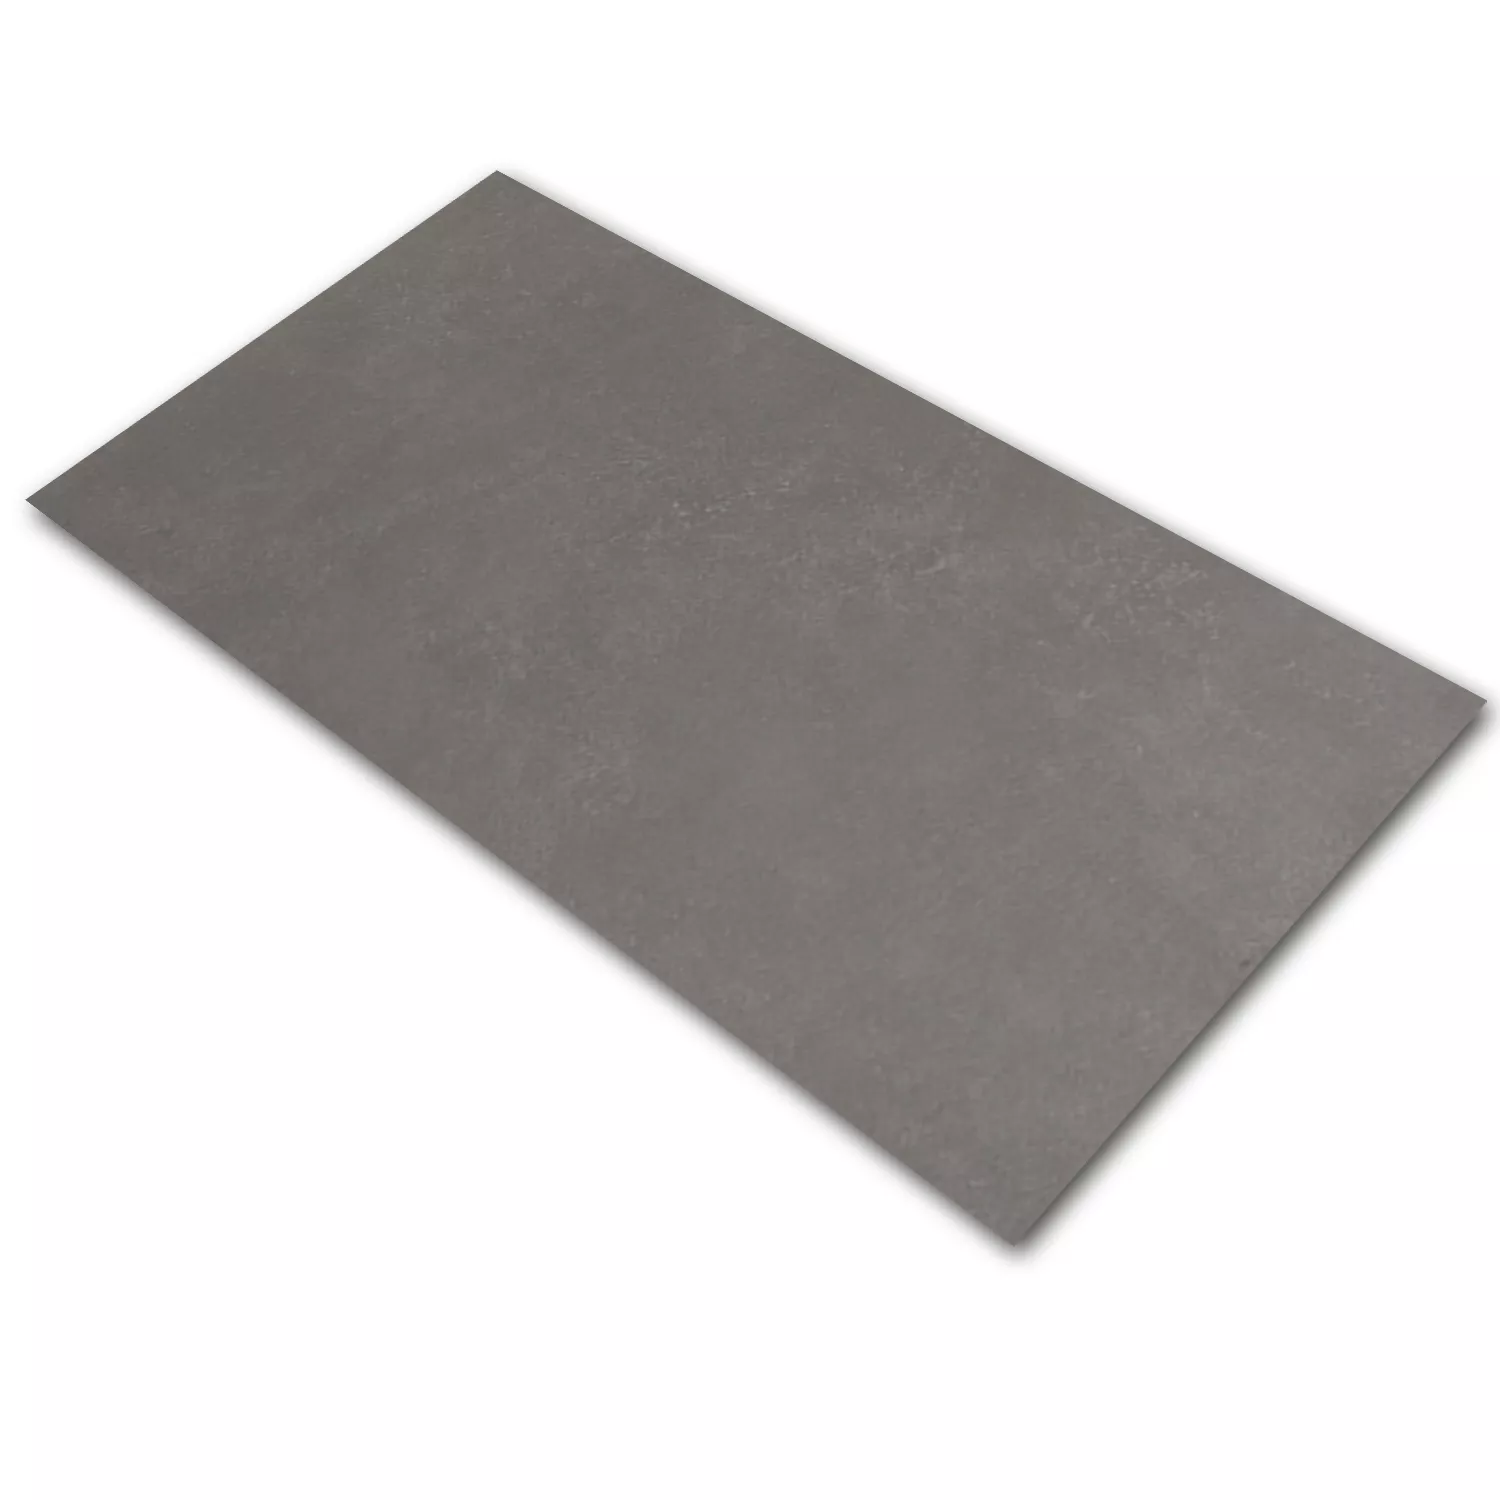 Floor Tiles Hayat Dark Grey 37x75cm